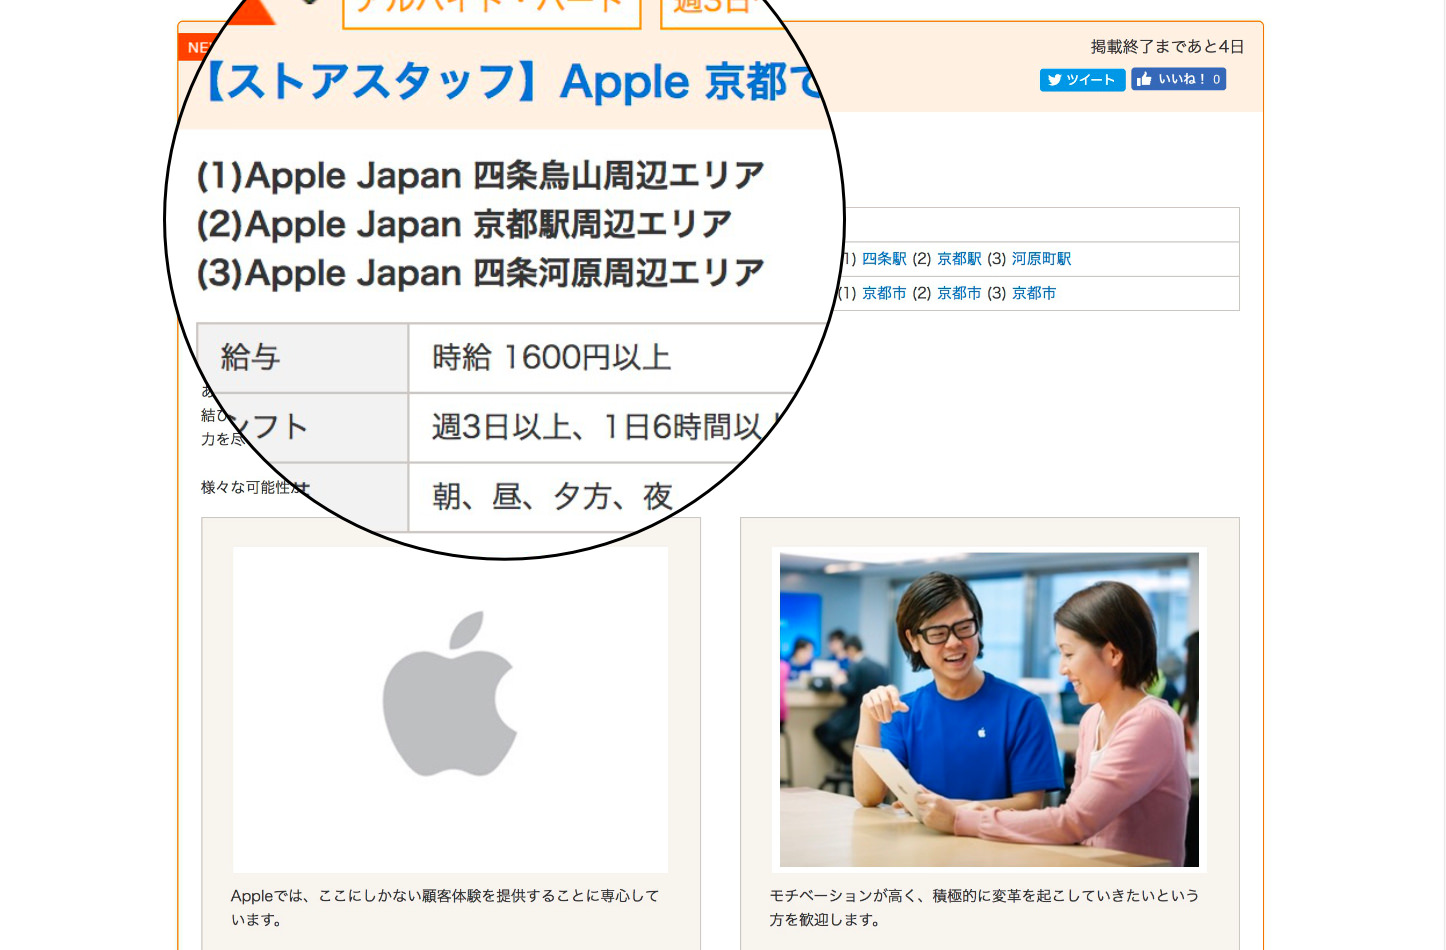 Kyoto-Apple-Store.jpg